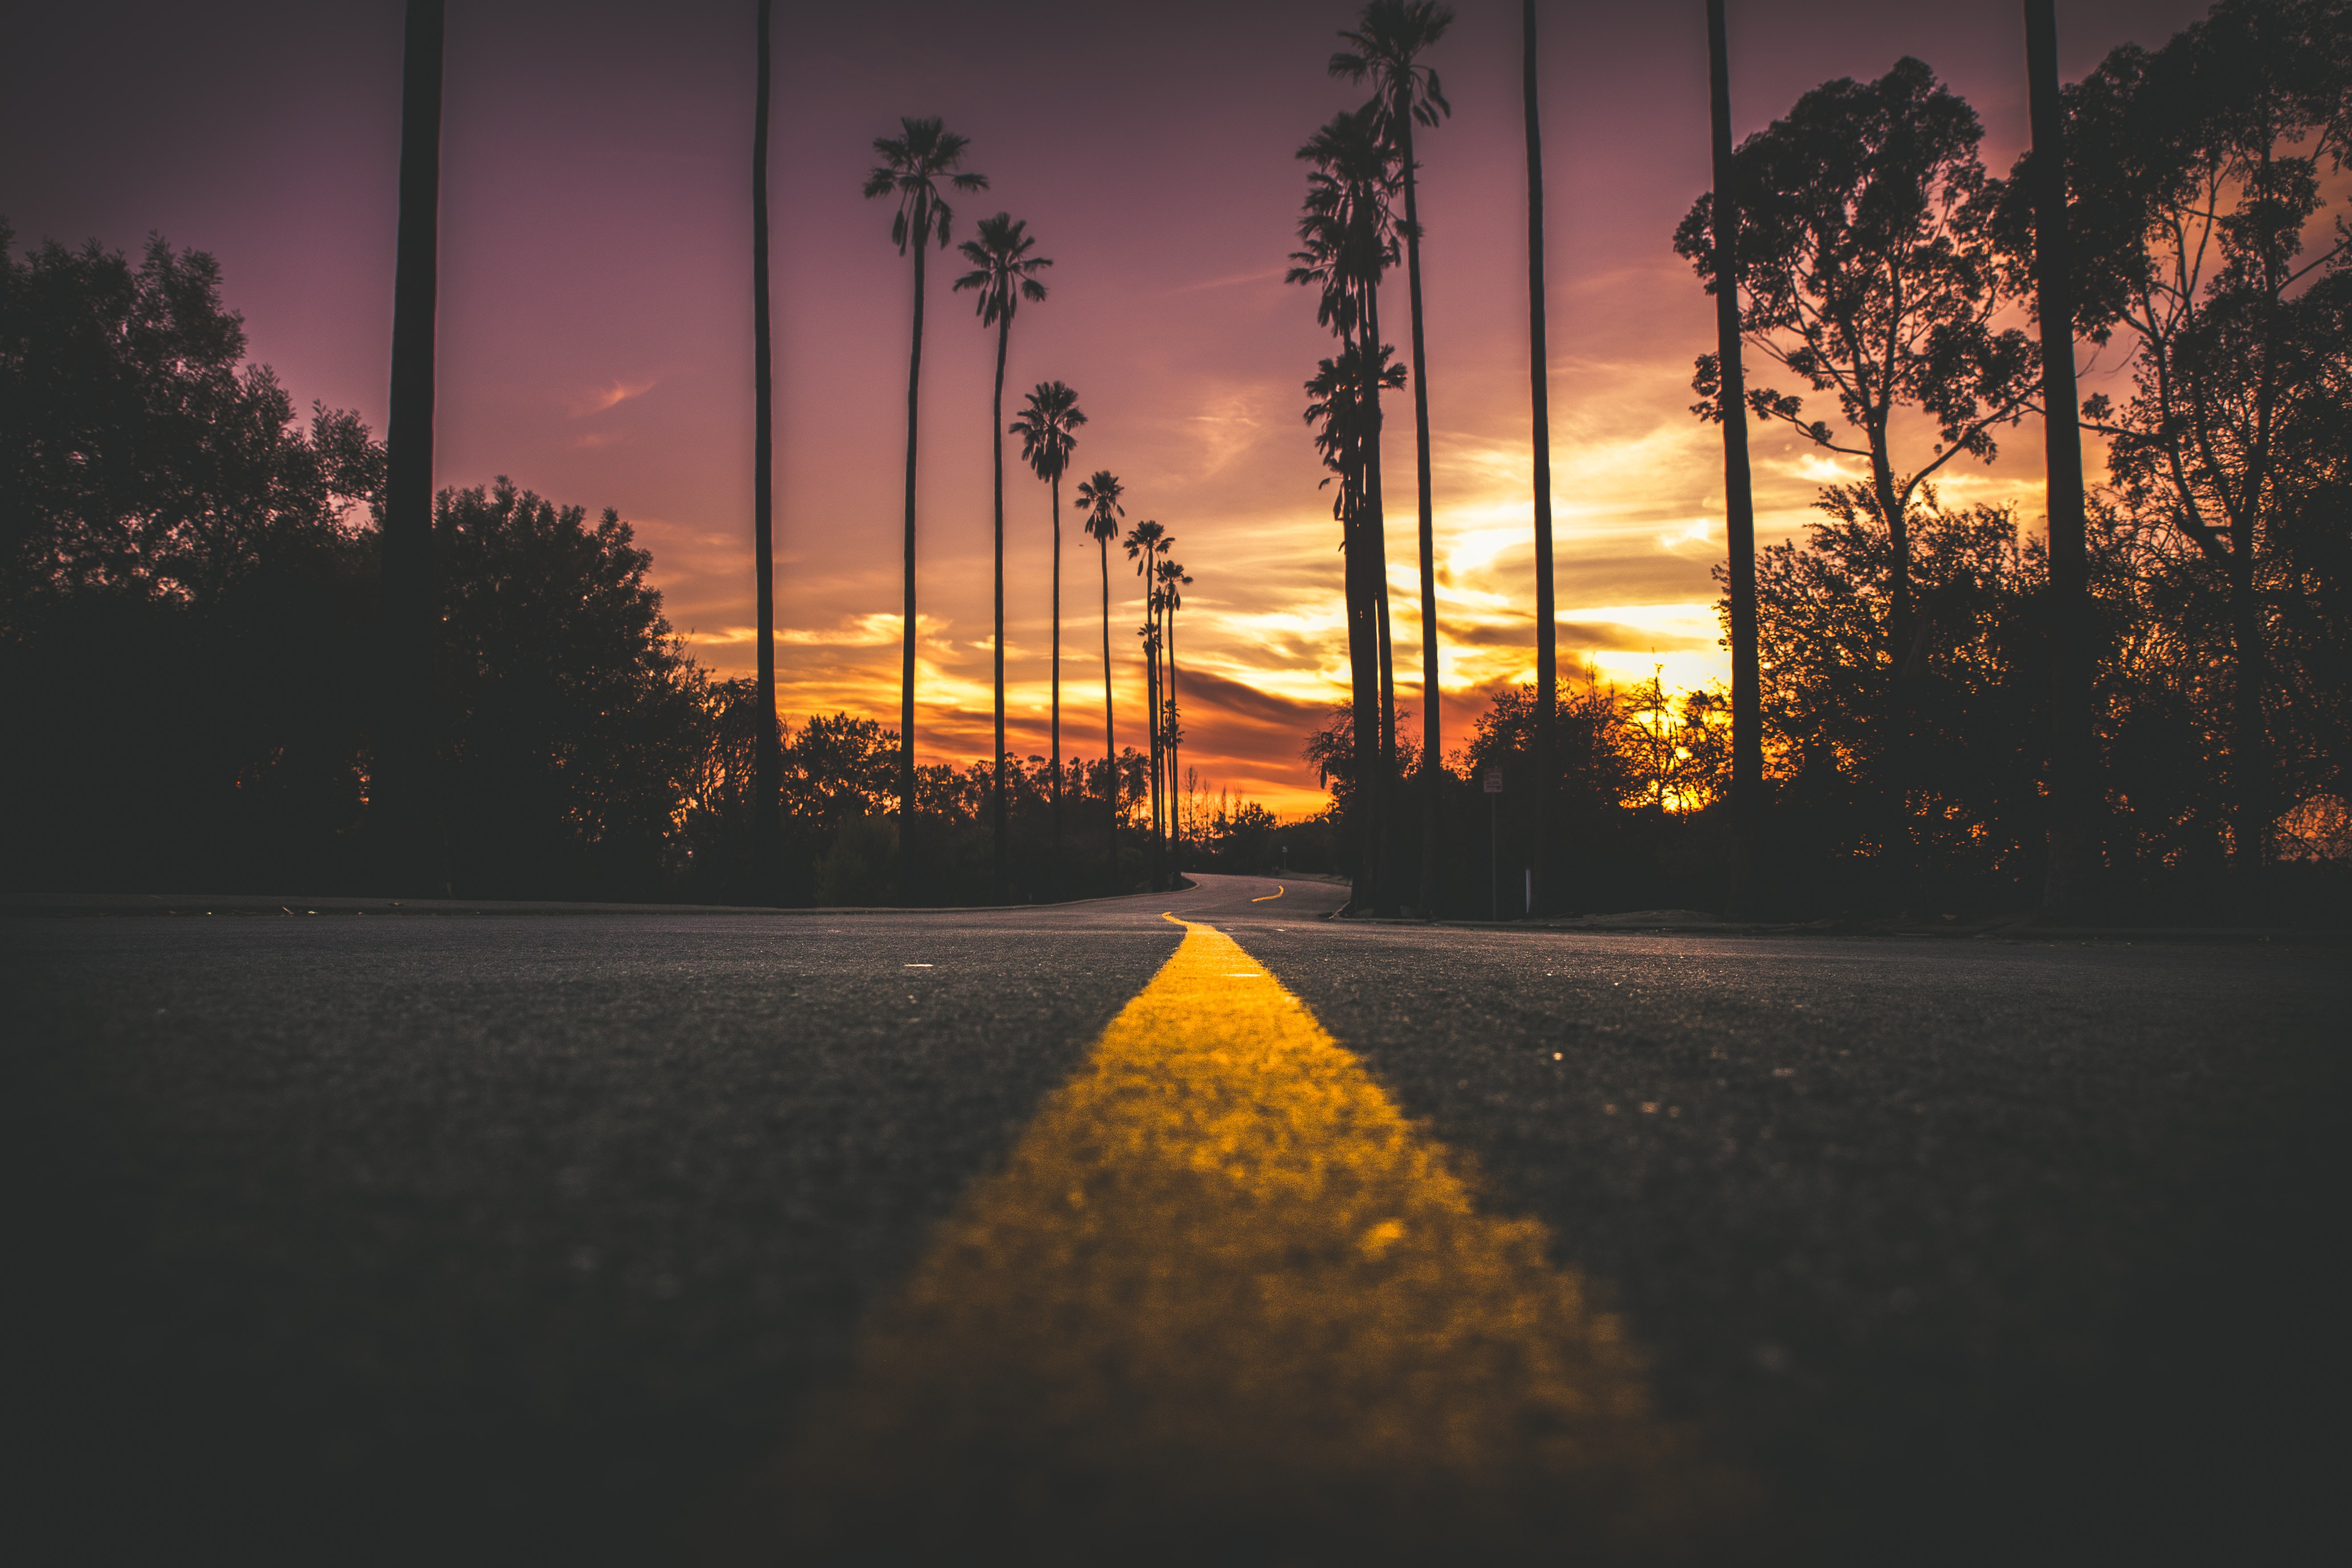 General 5279x3519 landscape nature road sunset palm trees asphalt silhouette orange sky closeup